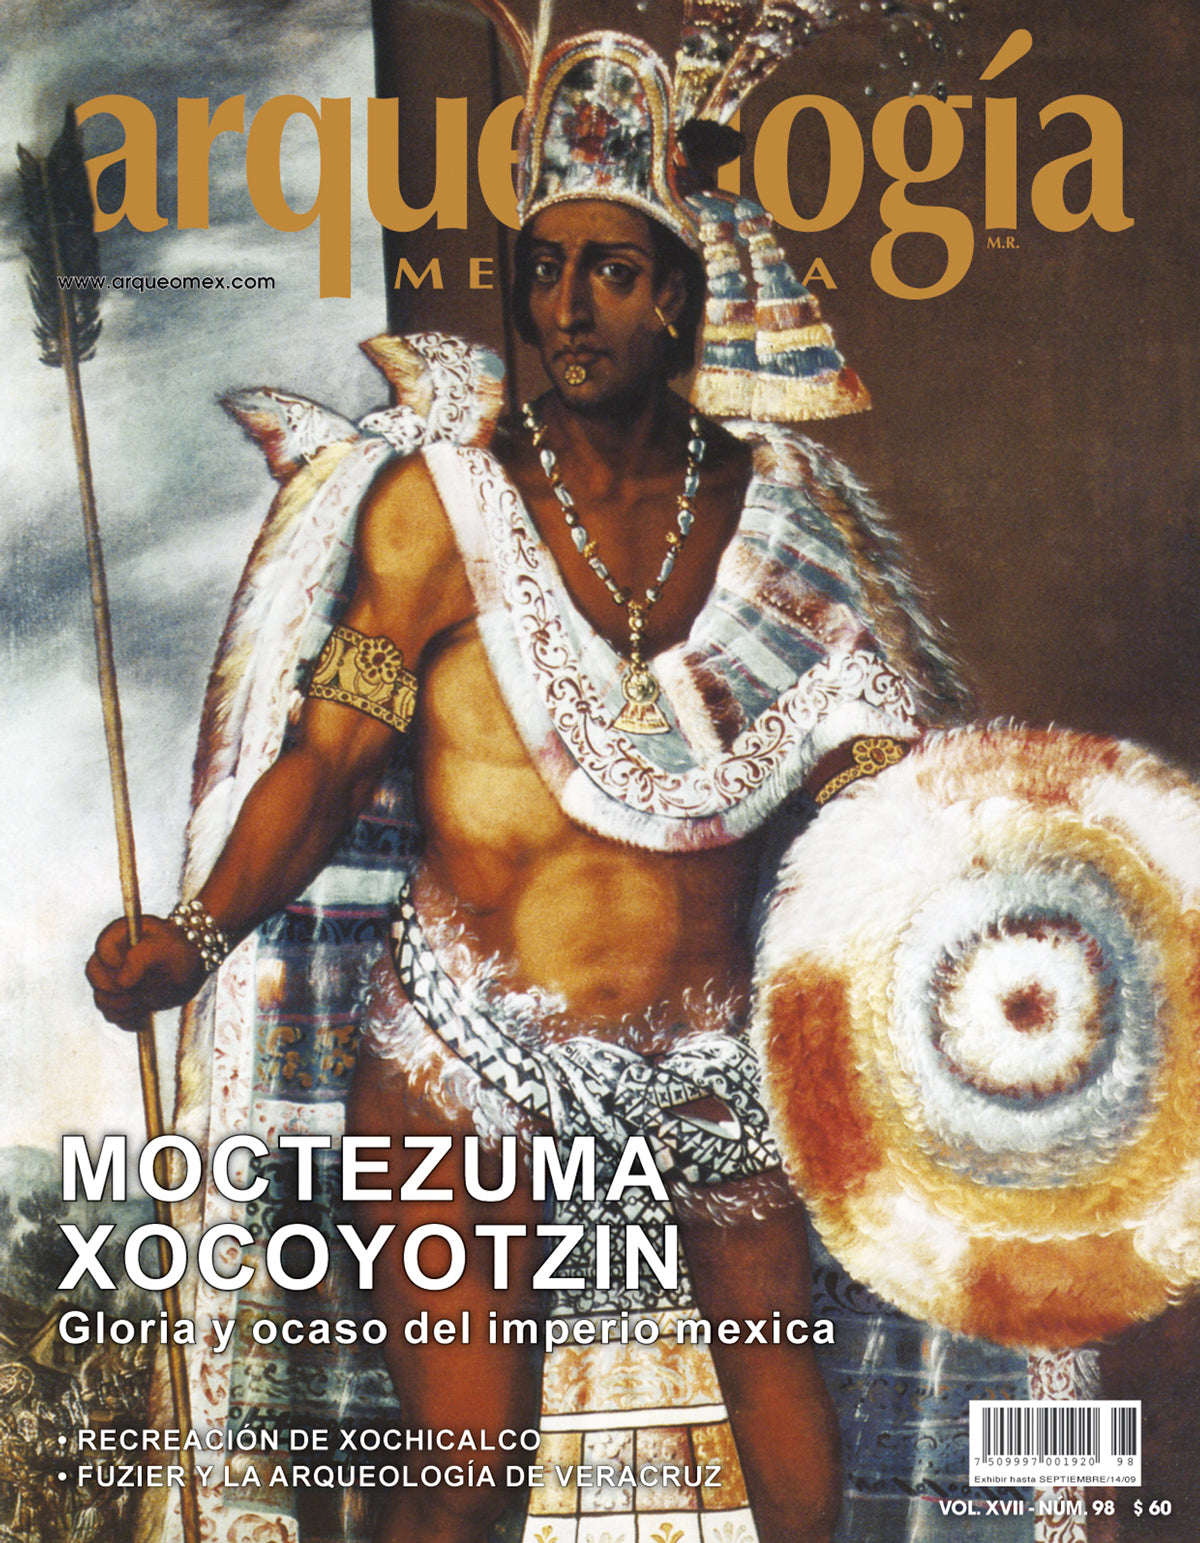 Moctezuma Xocoyotzin. Gloria y ocaso del imperio mexica